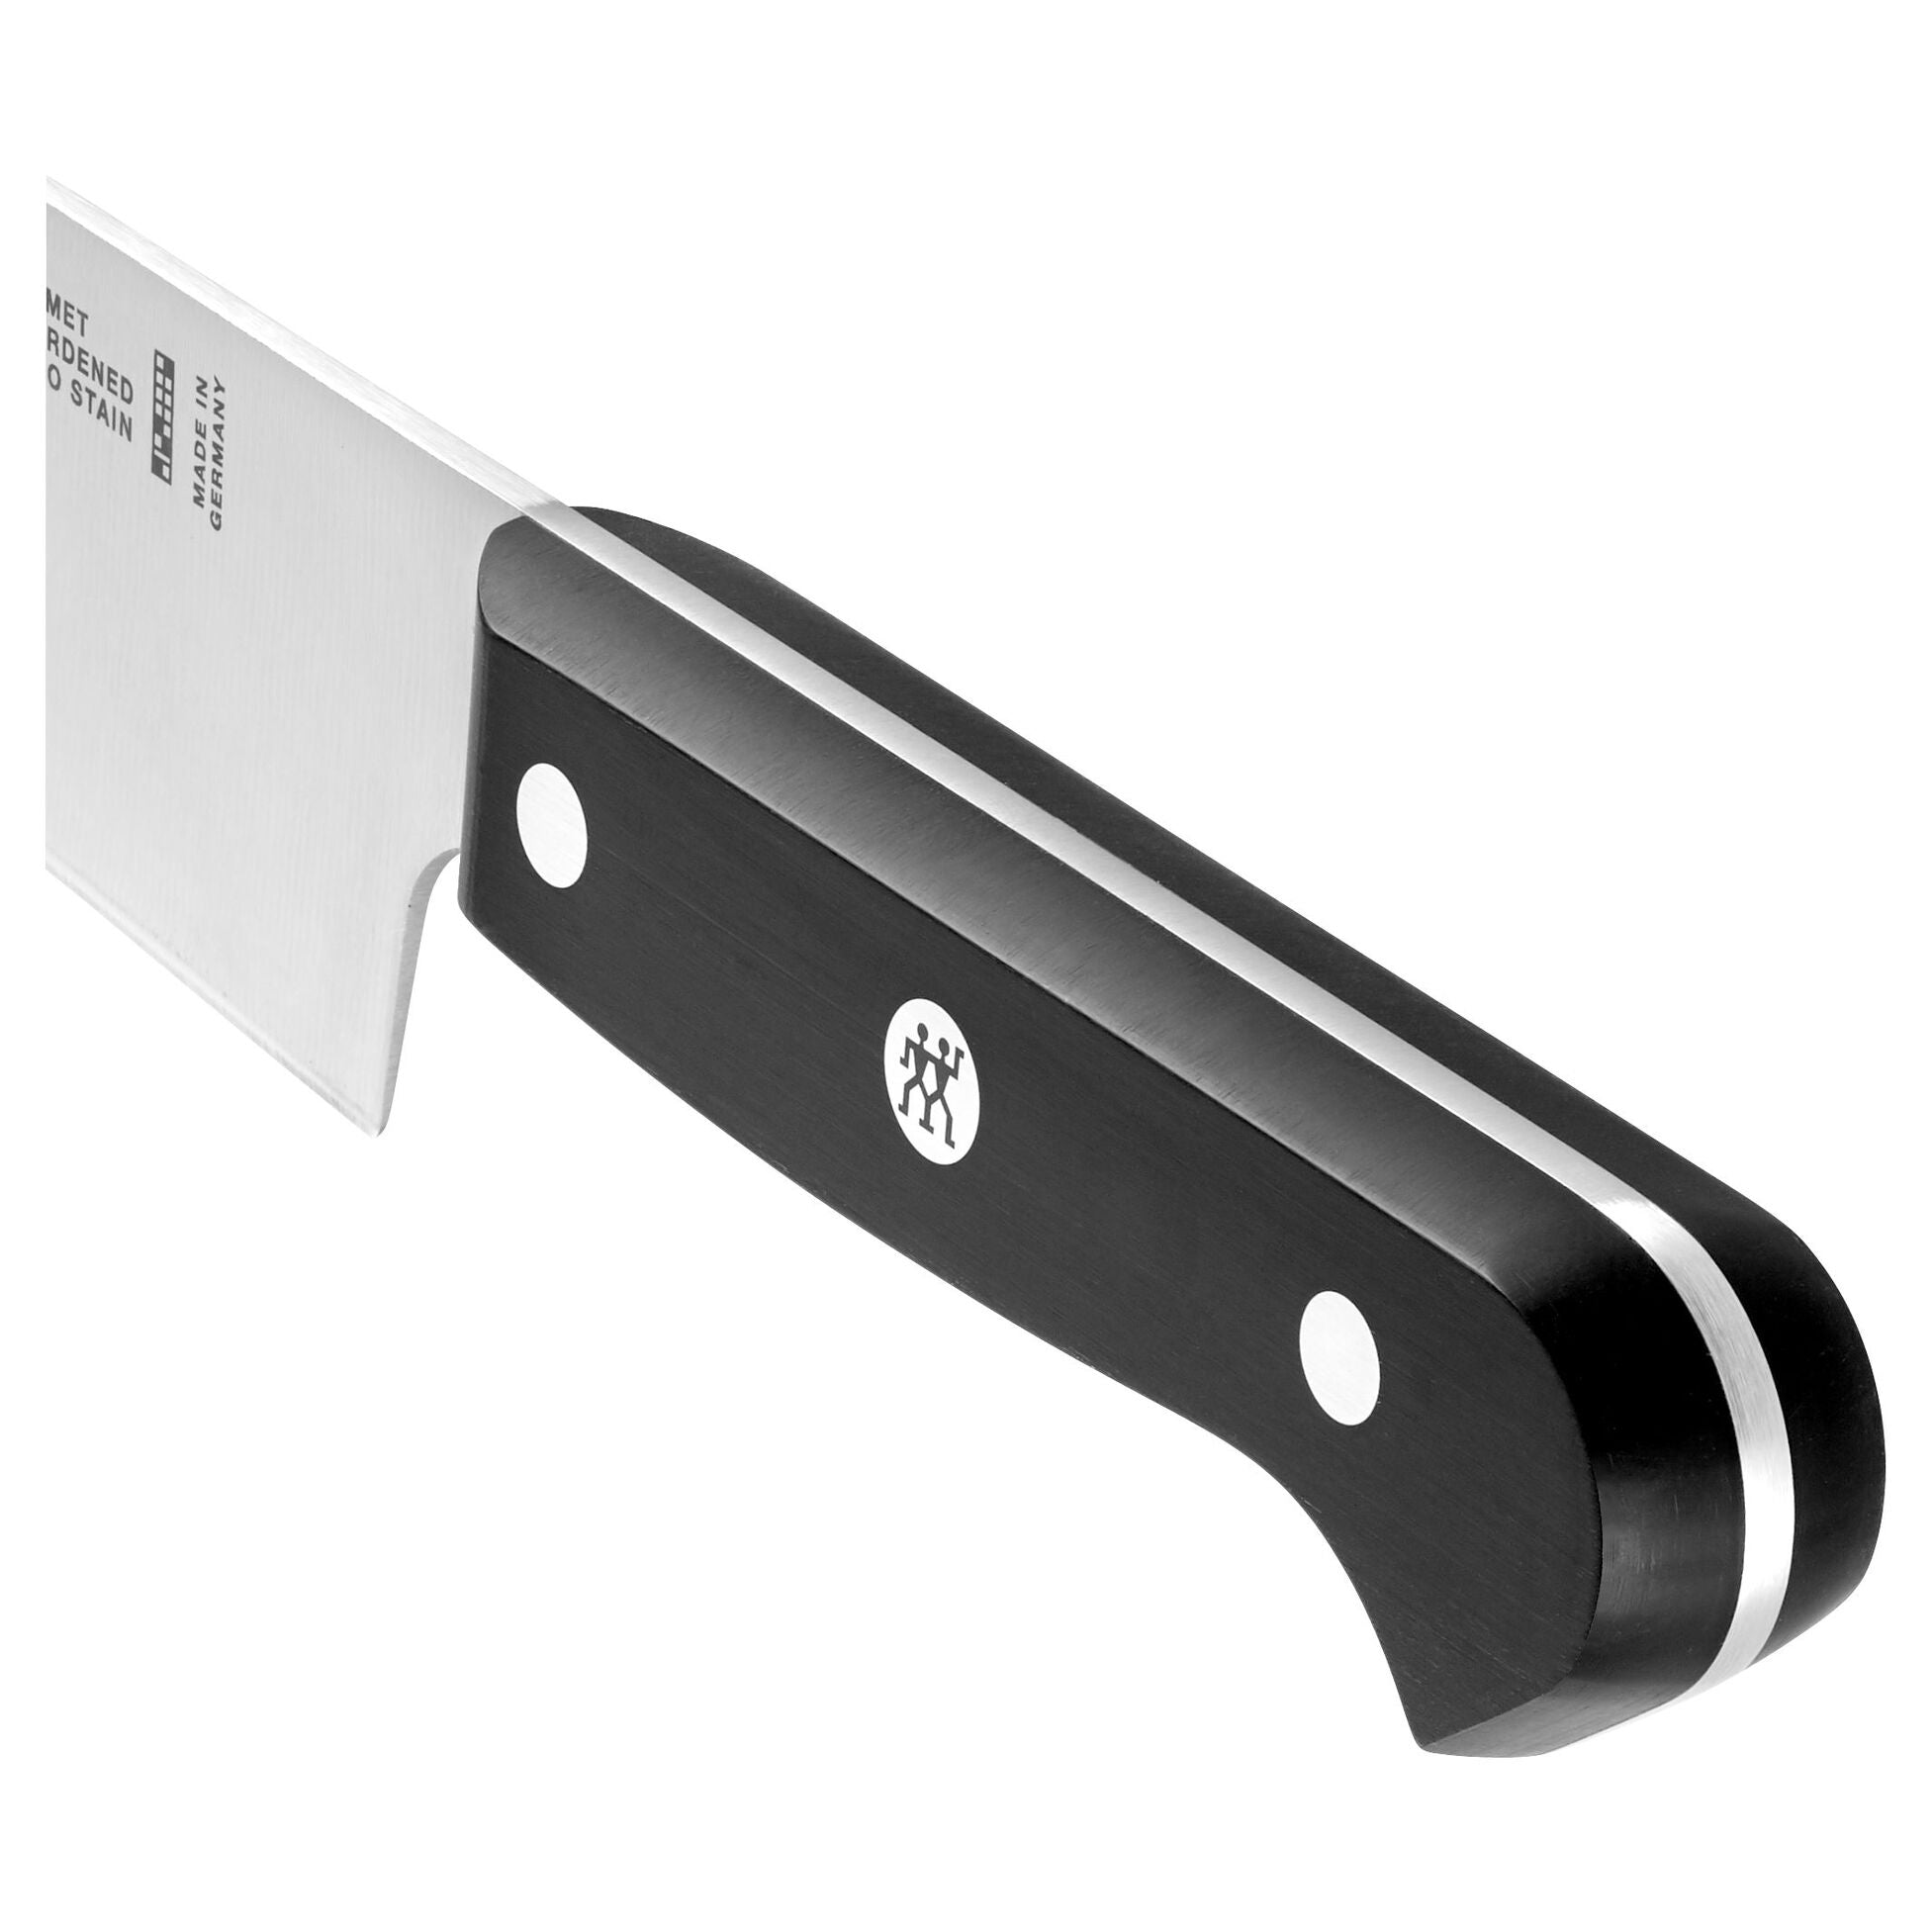 ZWILLING® Gourmet 13cm Utility Knife